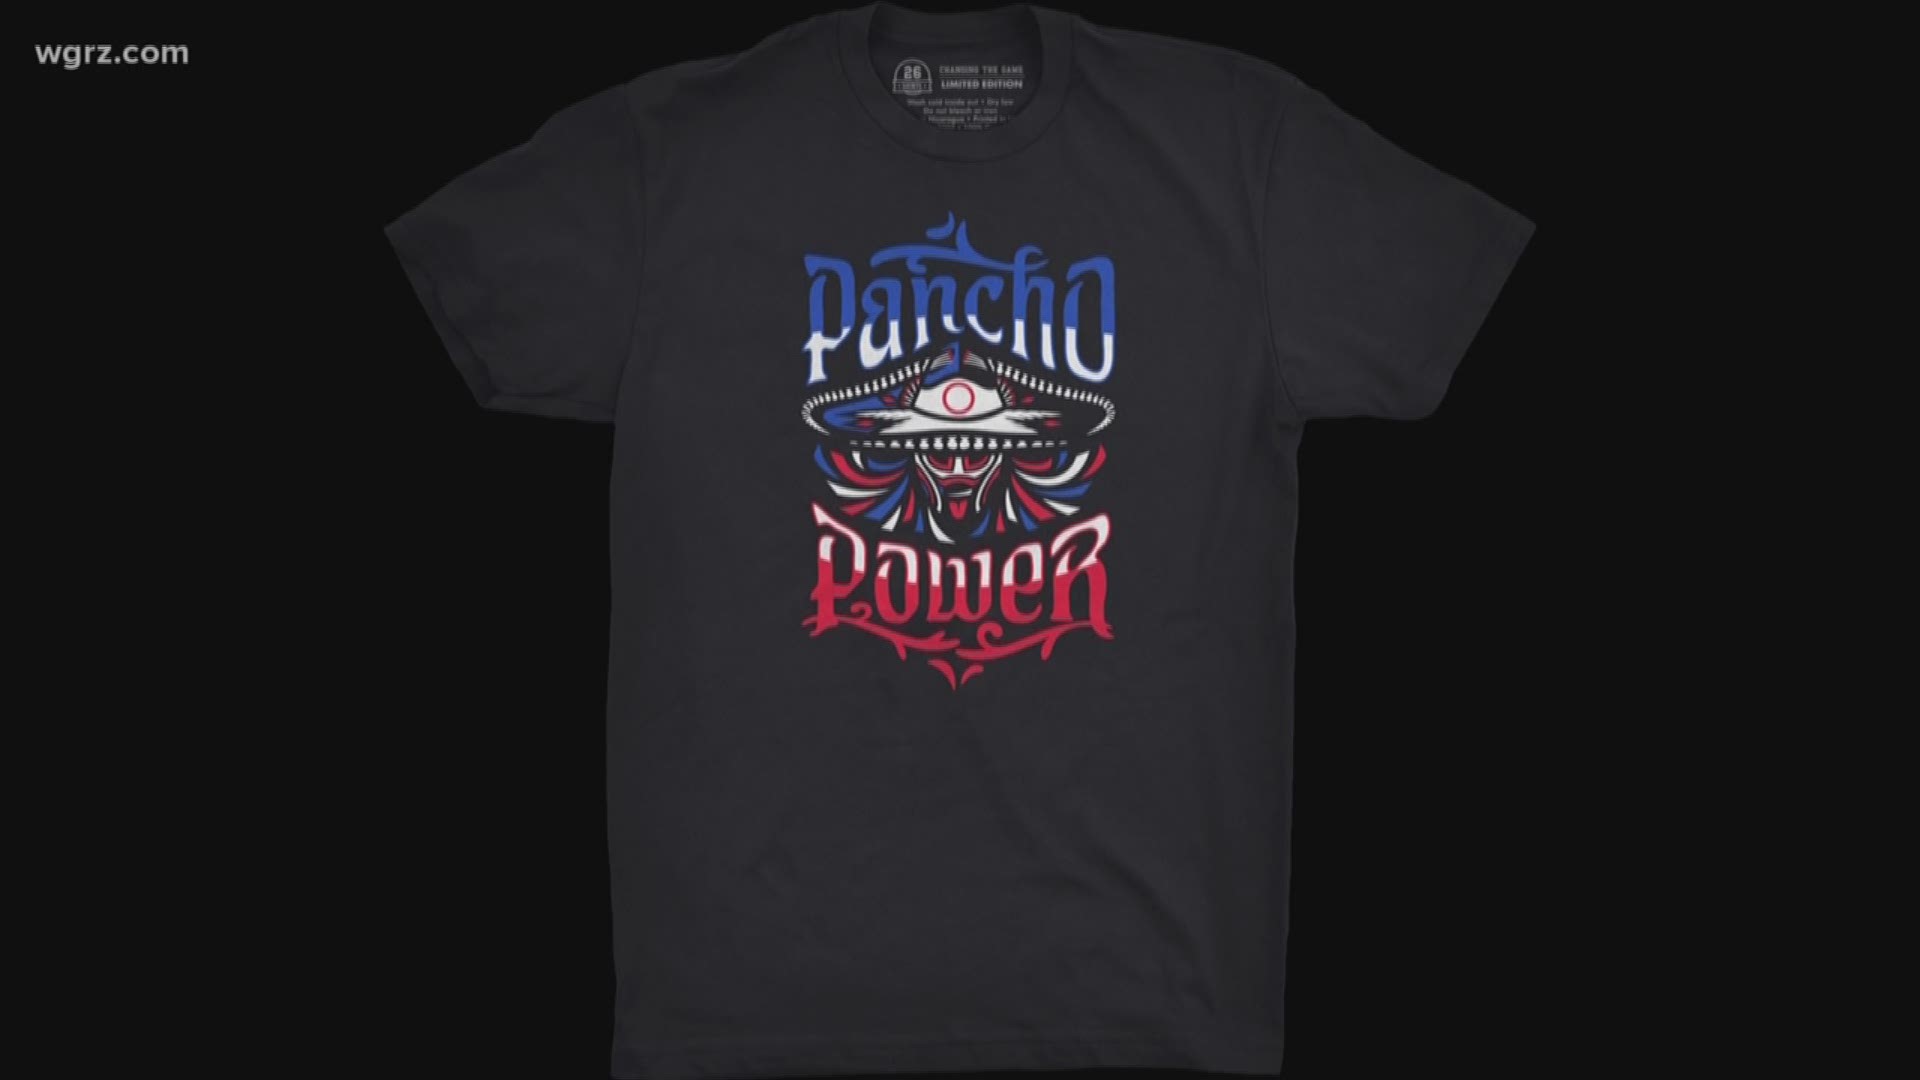 26 Shirts Raising Money For "Pancho Billa"